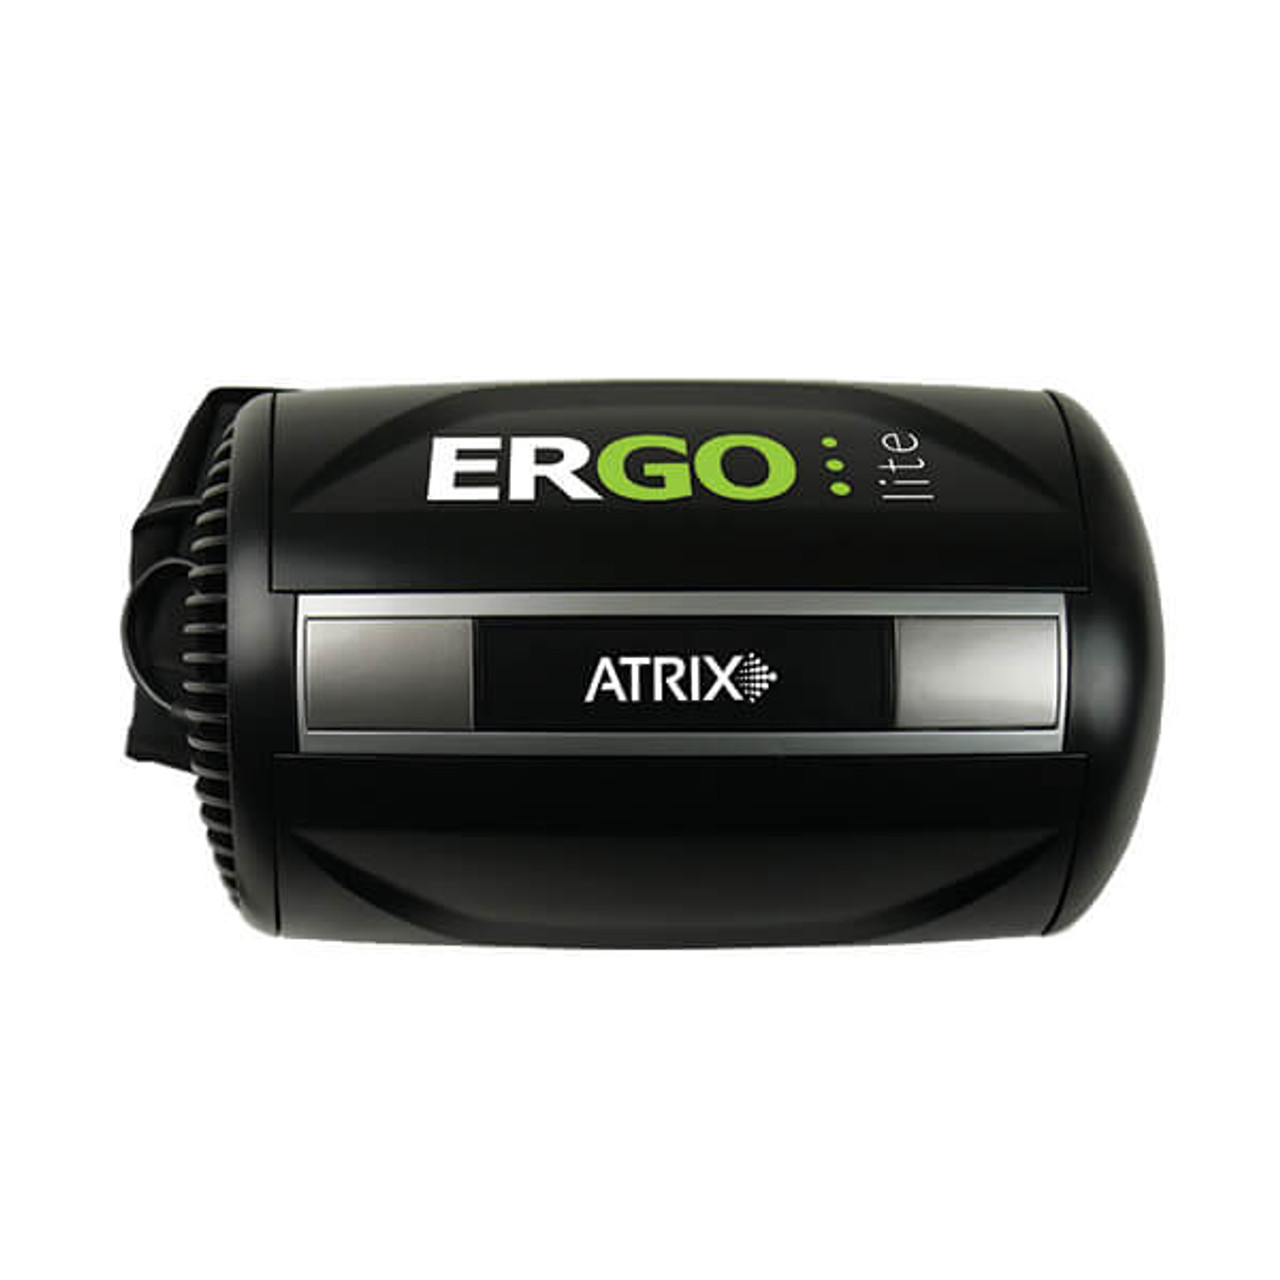 Atrix Ergo Lite 3 Qt. Hip Vacuum Cleaner with Tool Kit - 120V, 1200W